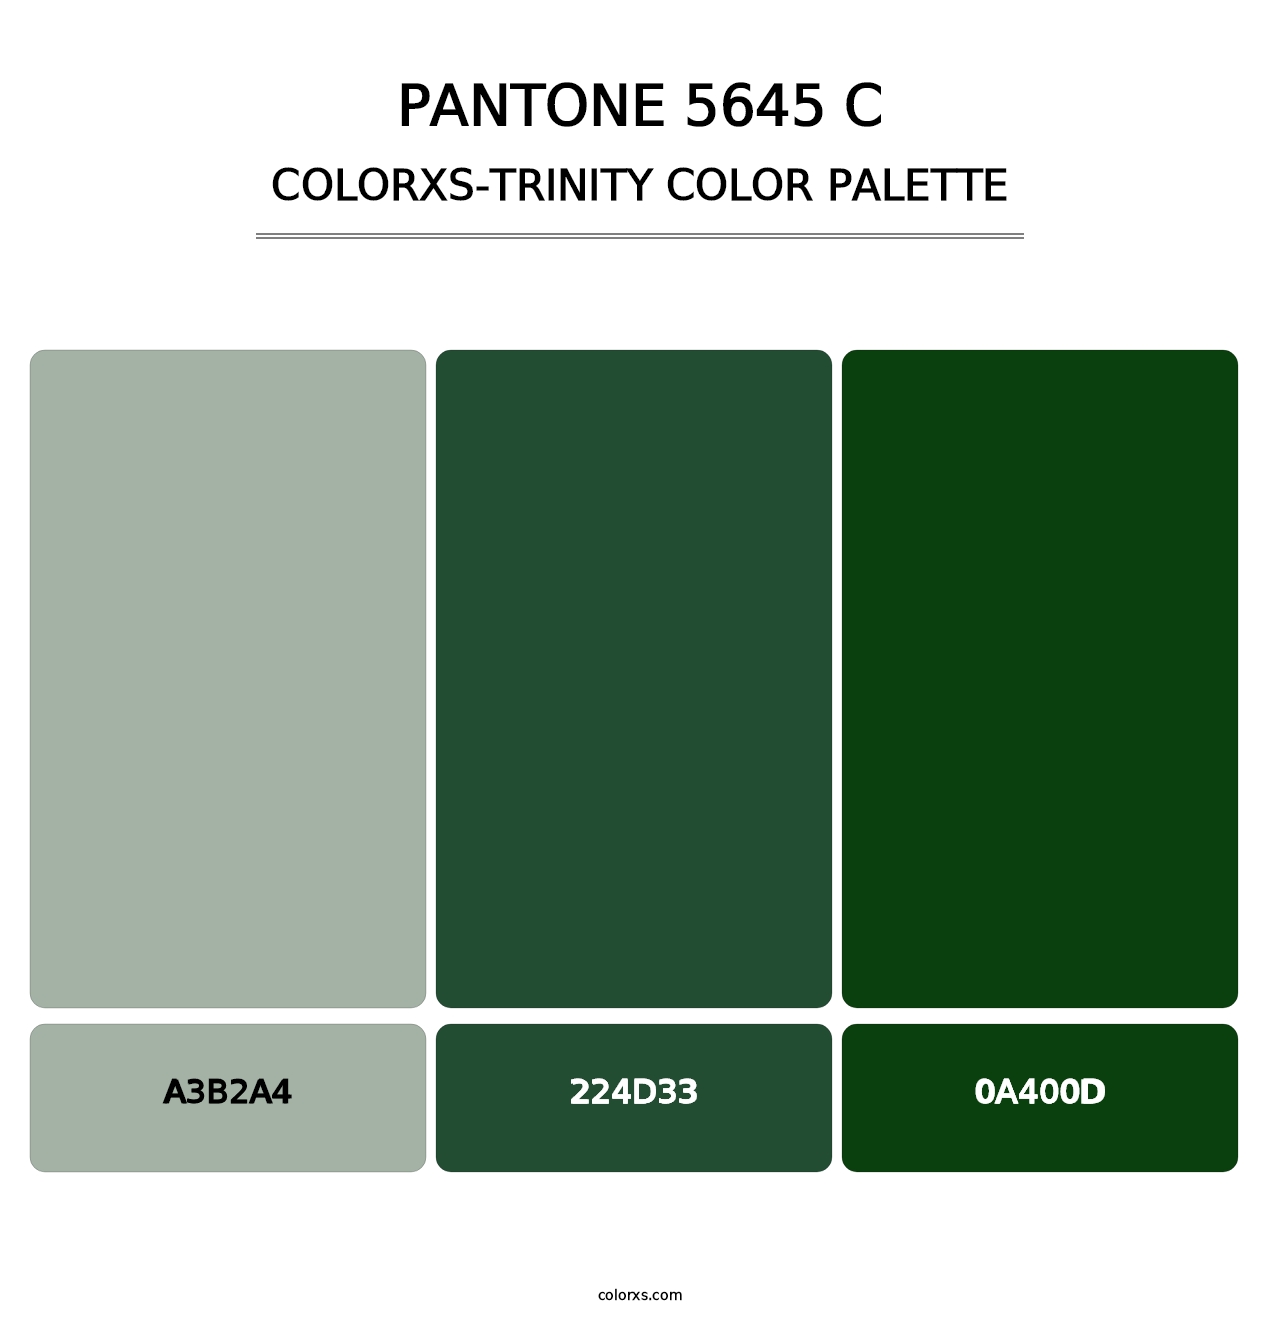 PANTONE 5645 C - Colorxs Trinity Palette